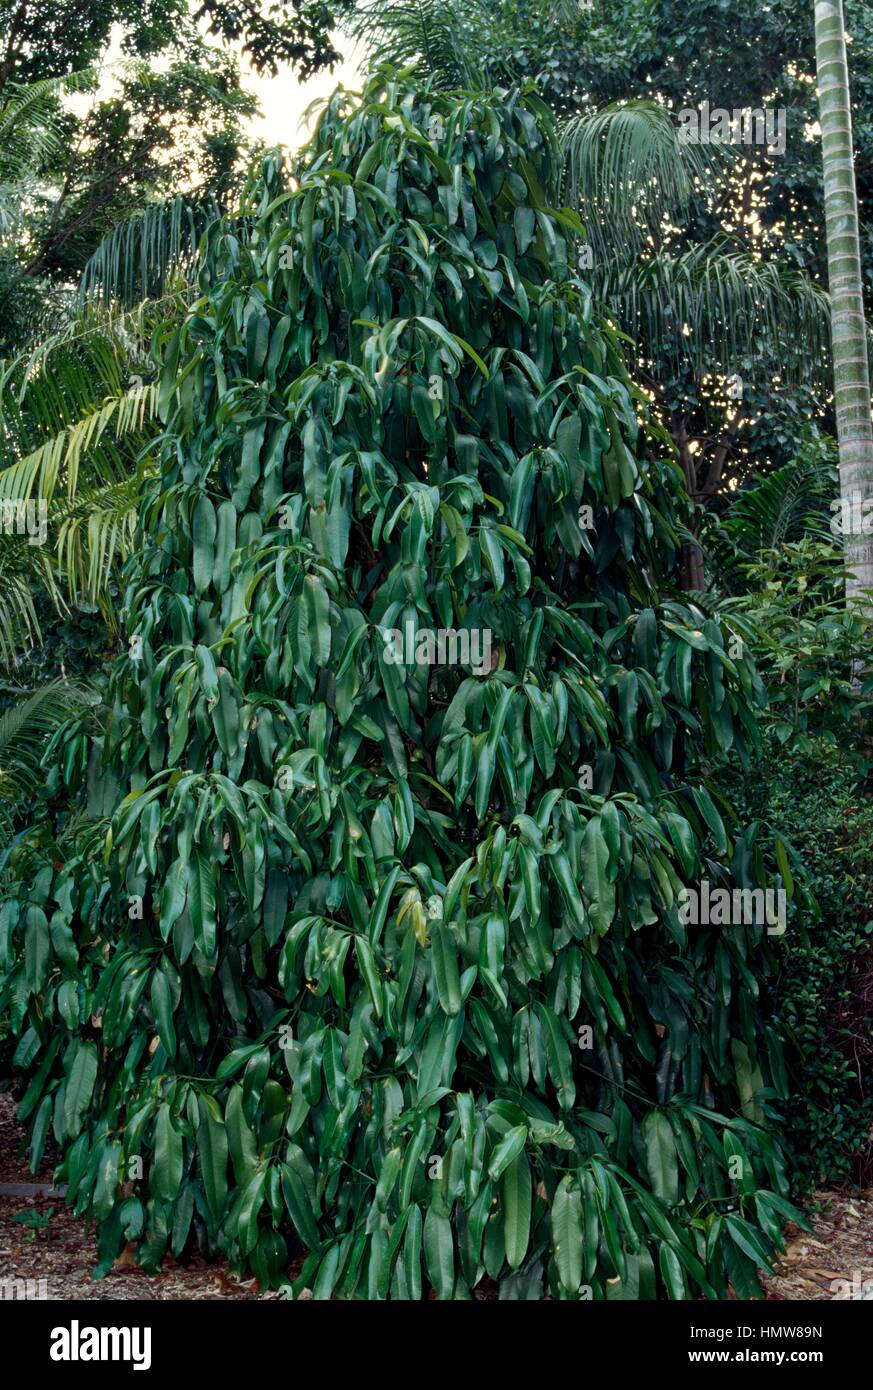 Eggtree or Himalayan garcinia (Garcinia xanthochymus), Clusiaceae. Stock Photo